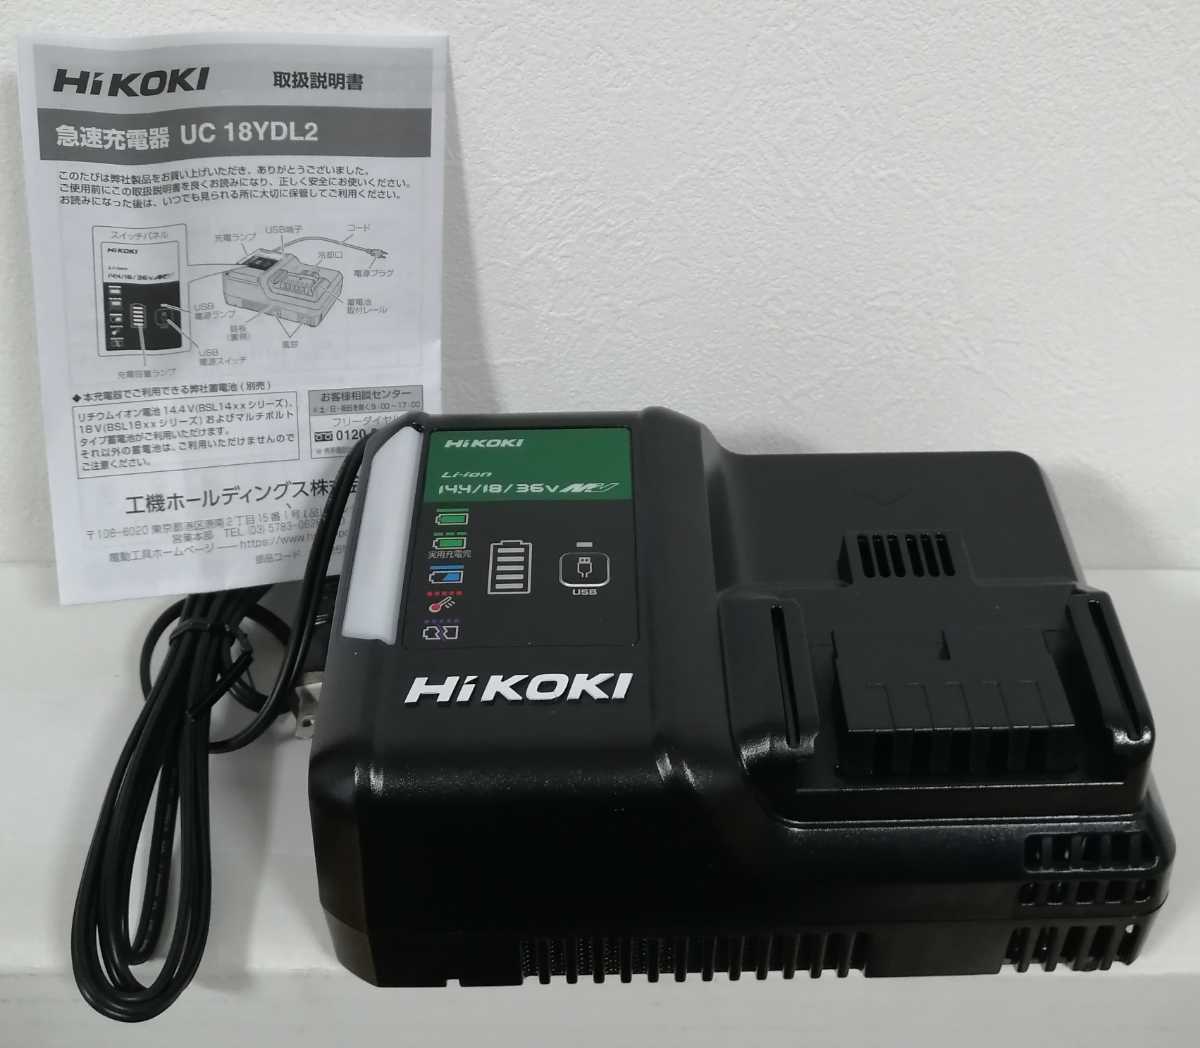 HiKOKI ハイコーキ 旧日立工機 急速充電器 スライド式リチウムイオン電池14.4V~18V対応 USB充電端子付 超急速充電 UC18YDL  人気の